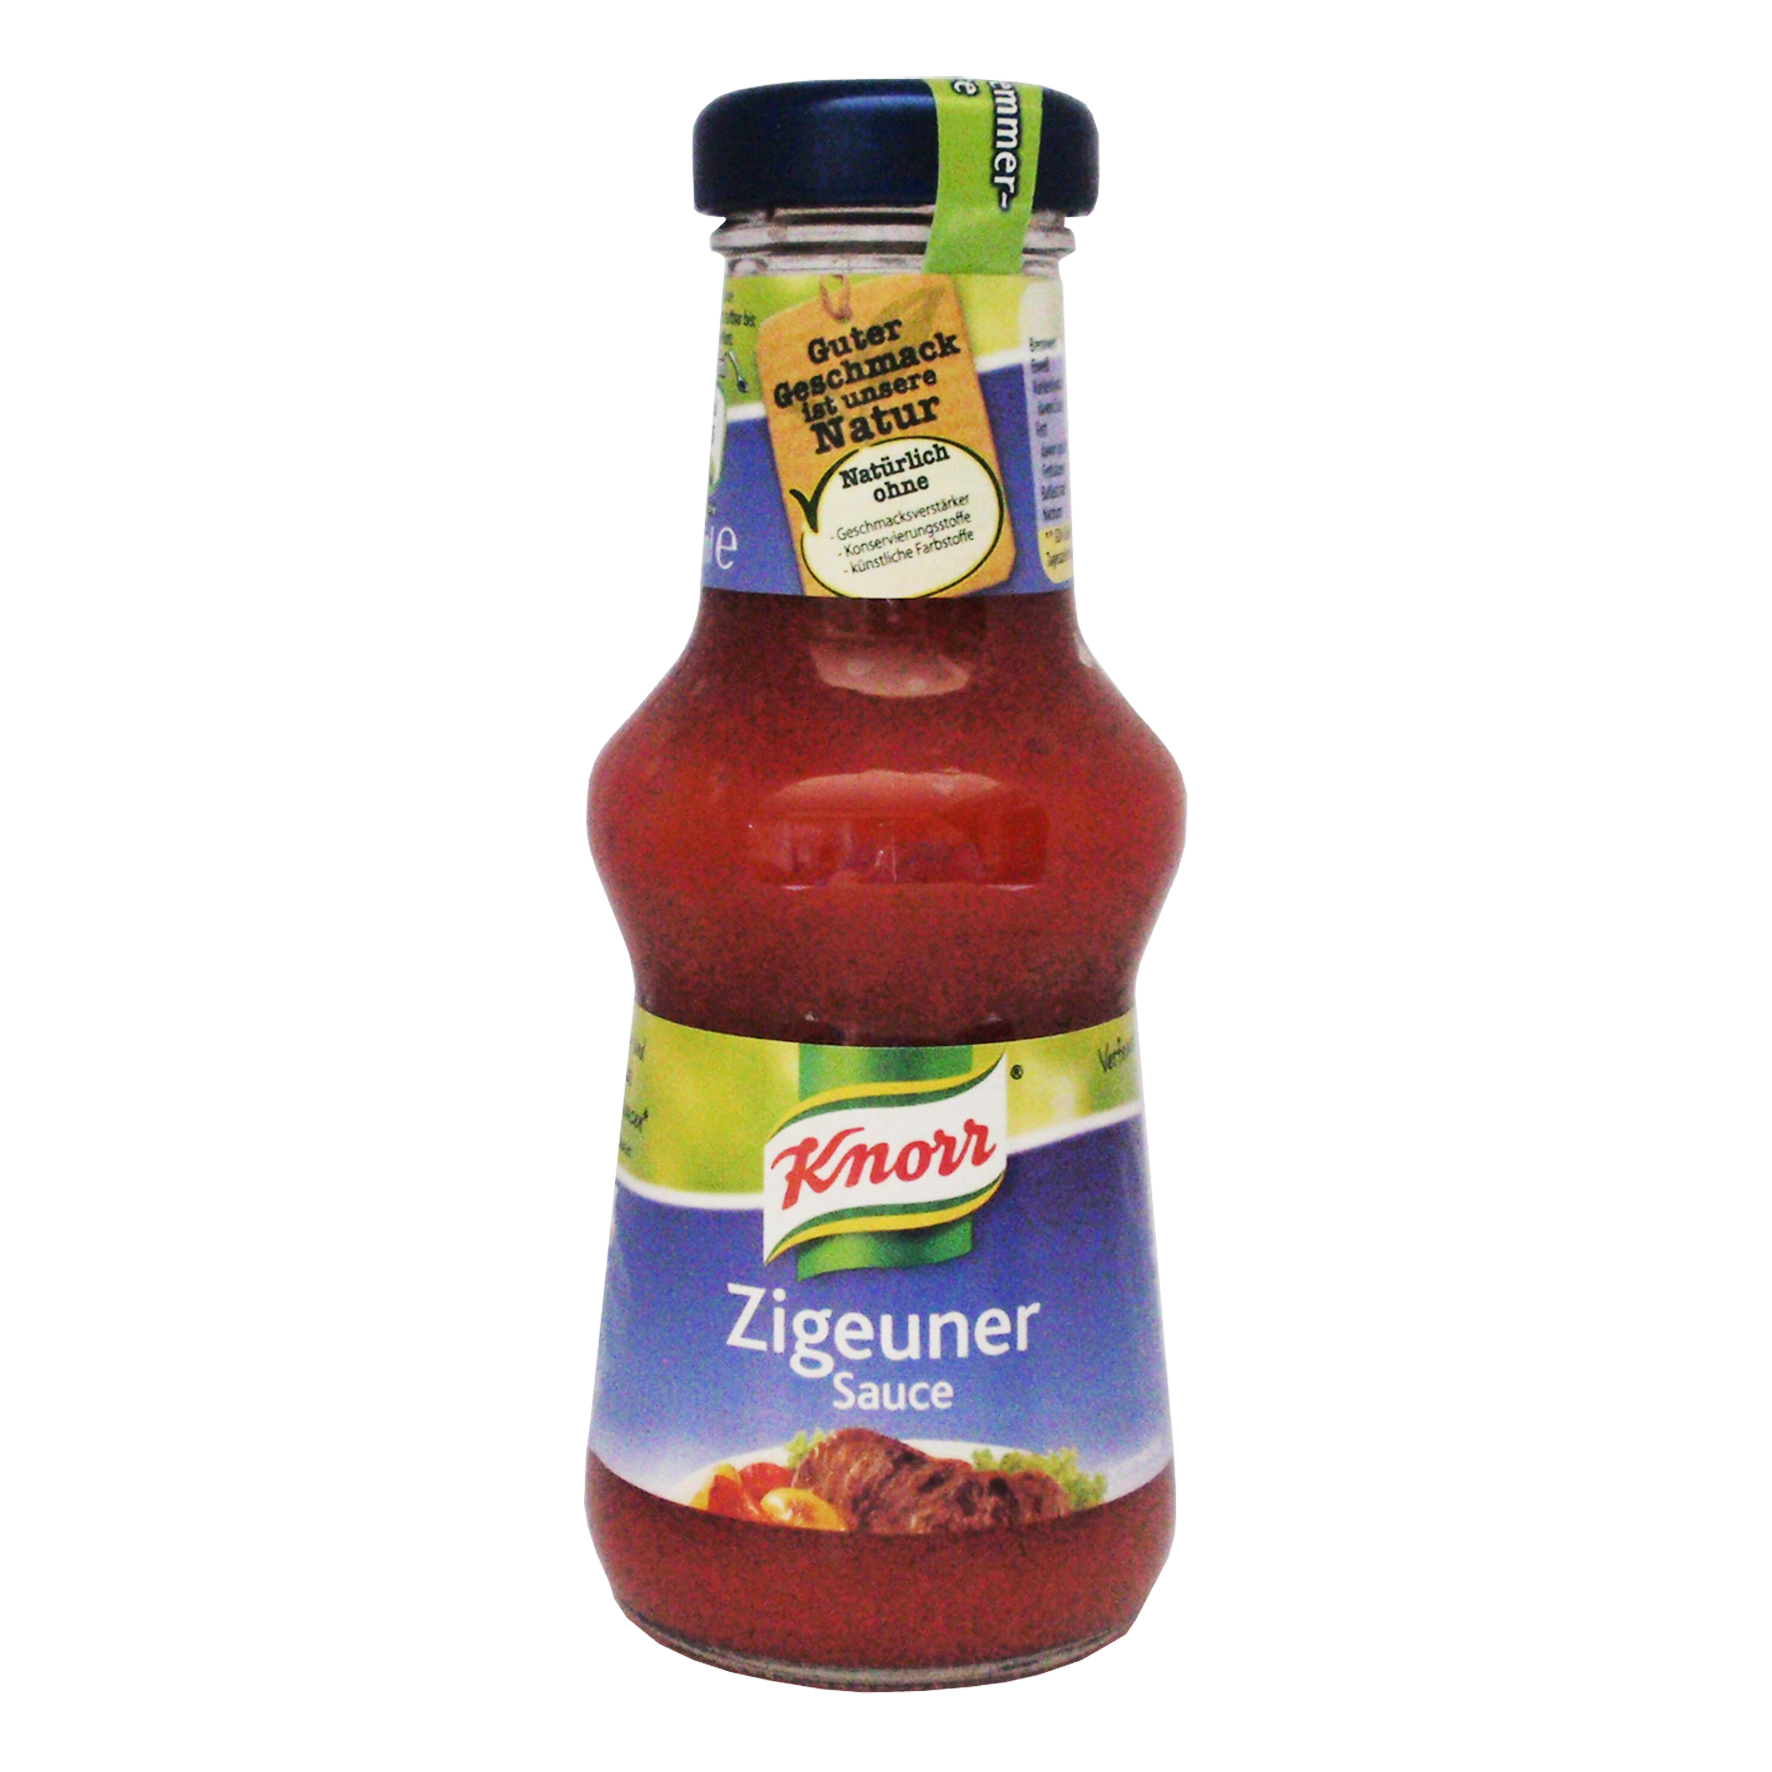 Knorr salsa gitana/zigeuner250